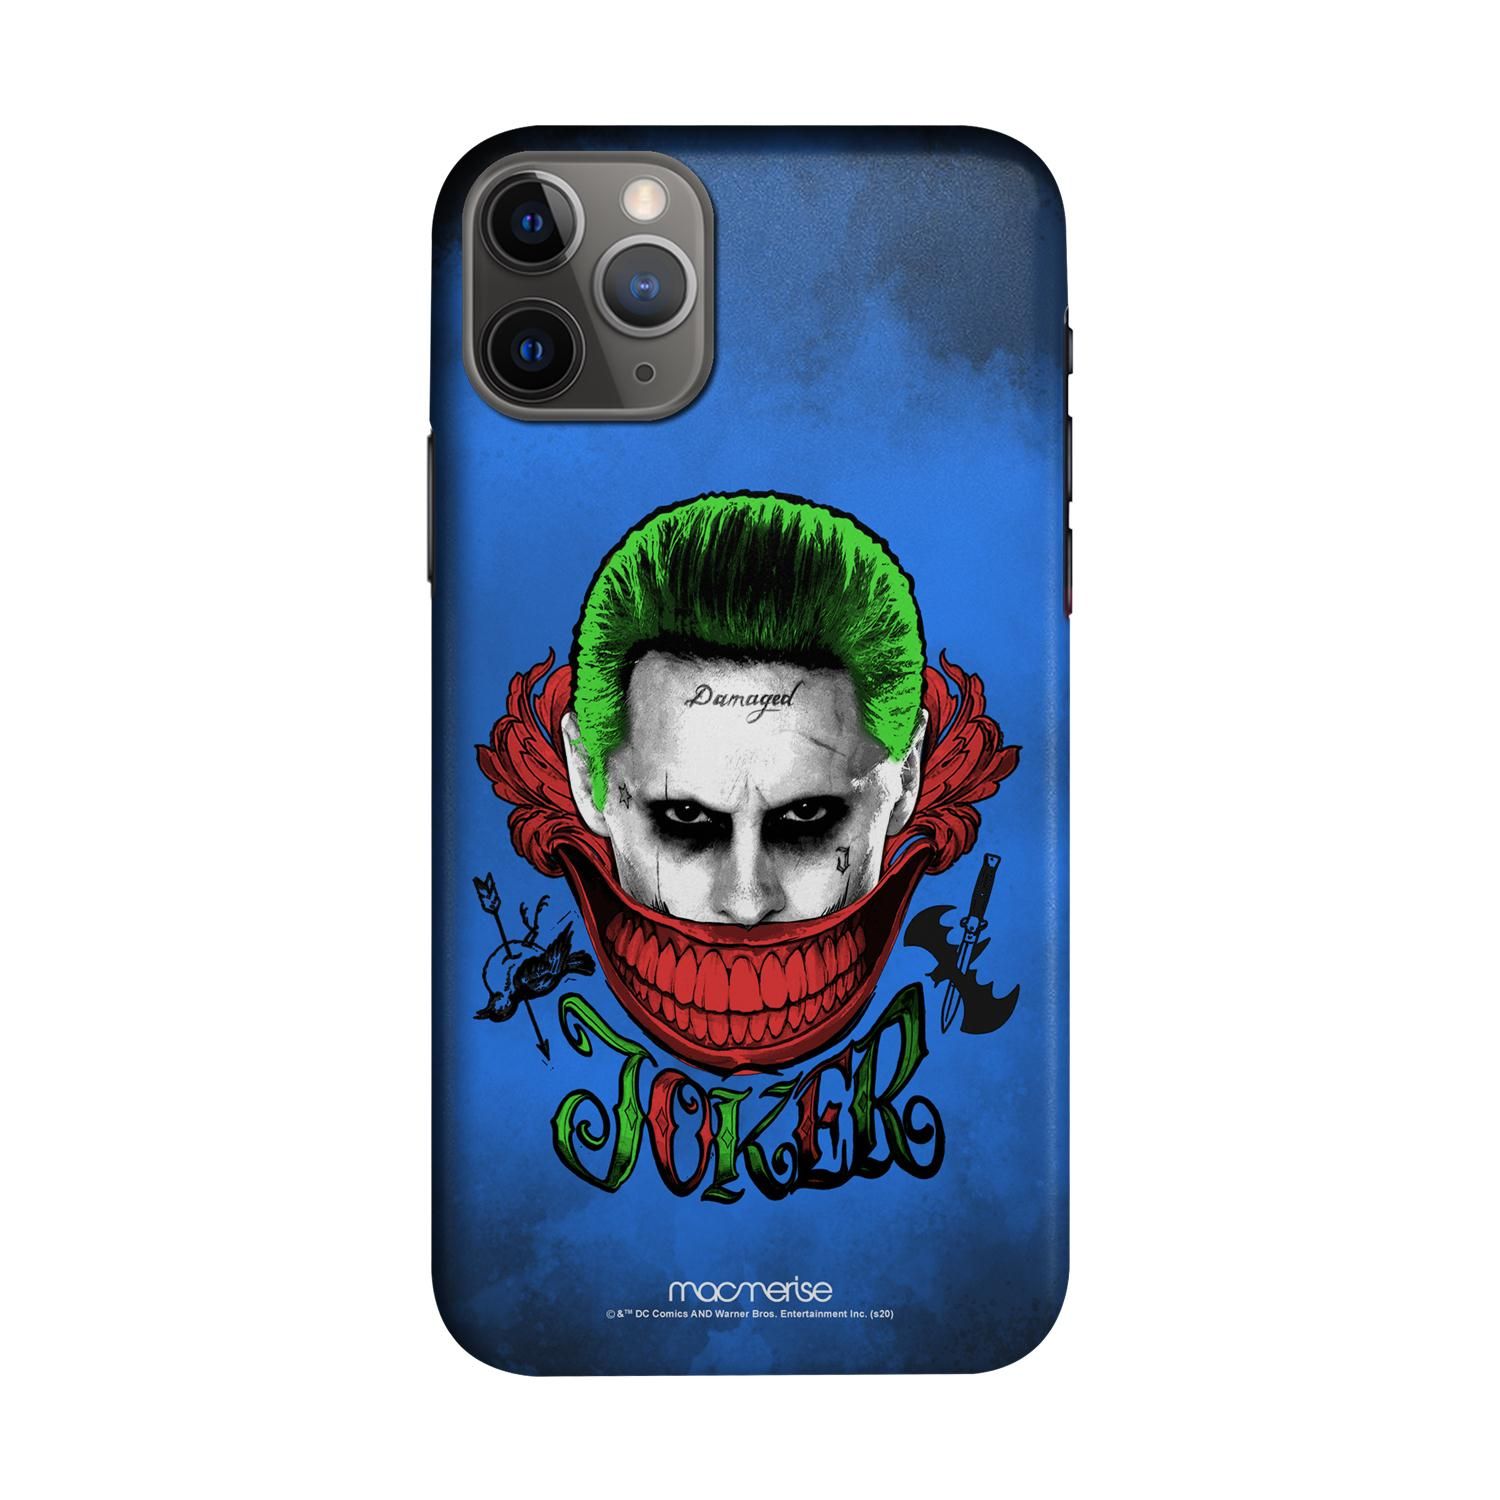 Damaged Joker - Sleek Phone Case for iPhone 11 Pro Max